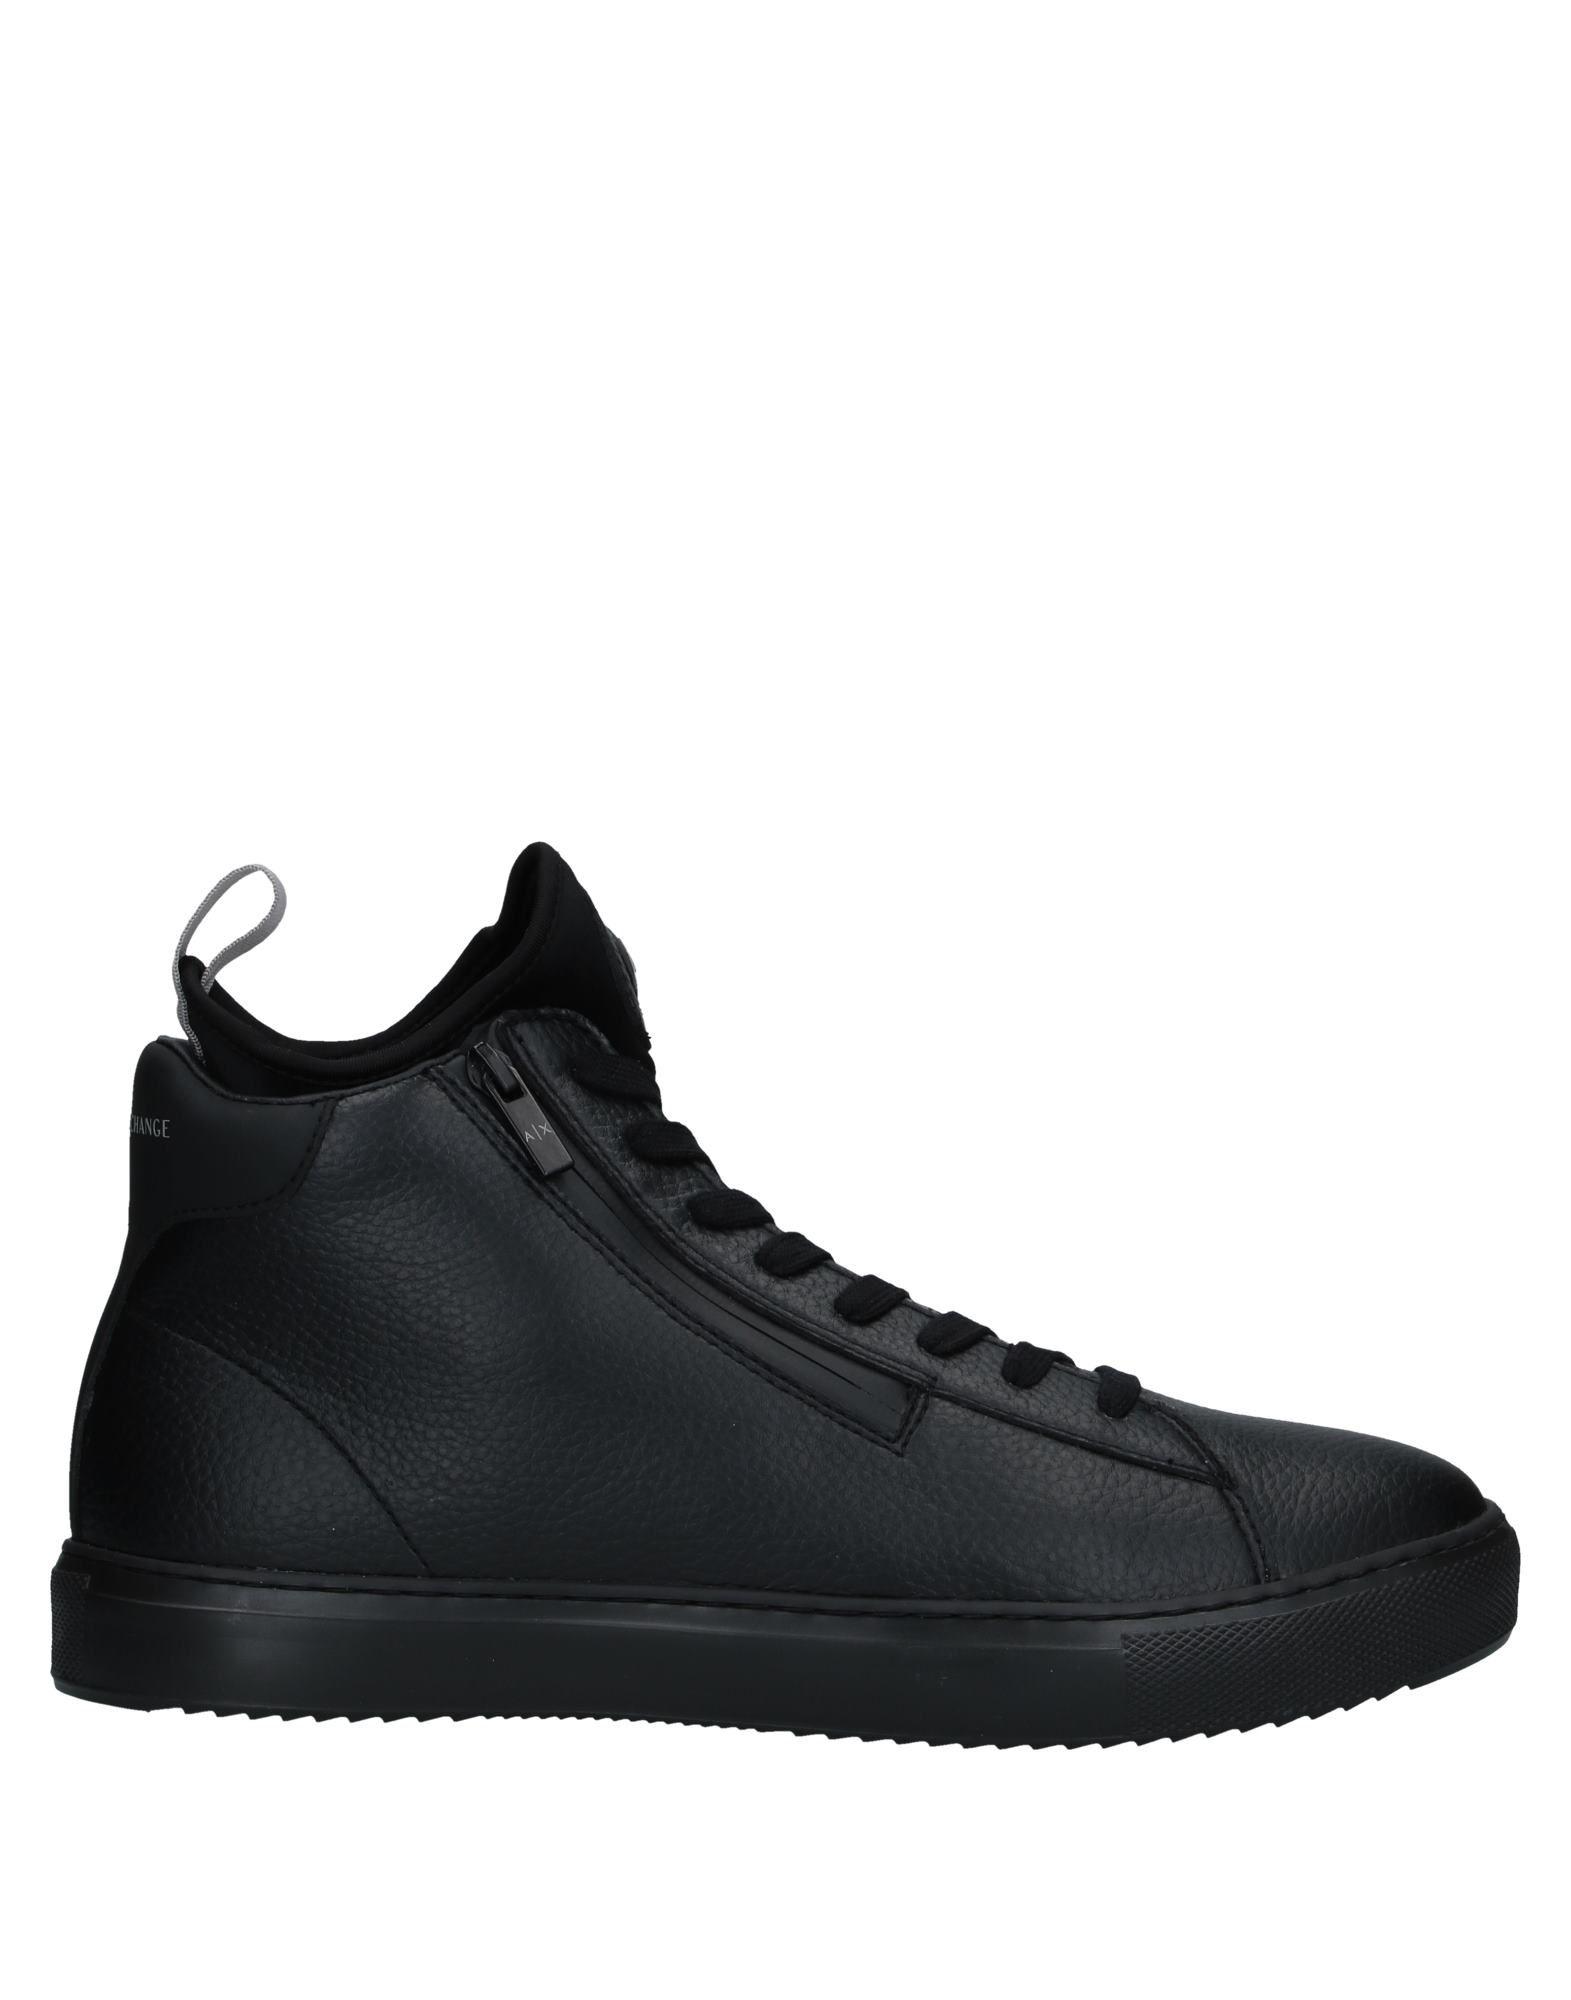 Armani Exchange High-tops & Sneakers in Black for Men - Lyst